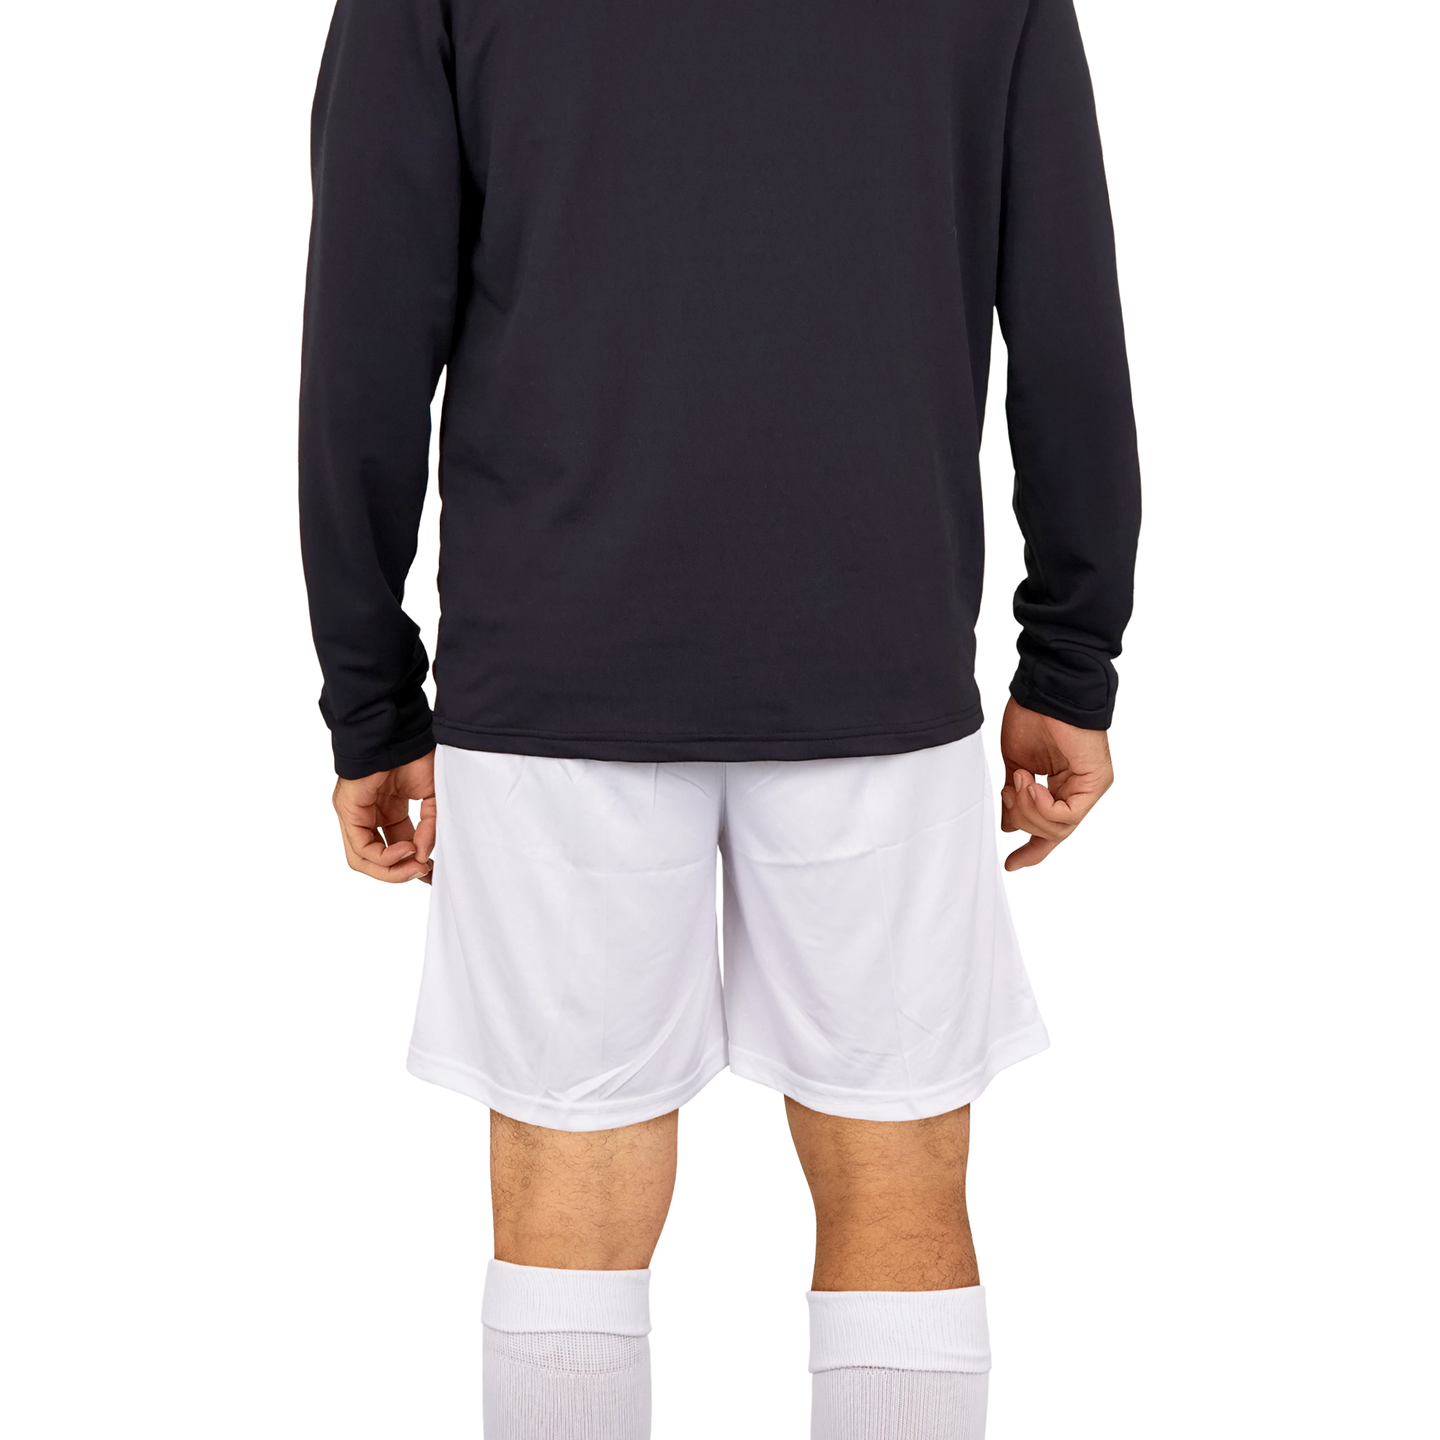 Essential Football Shorts - White